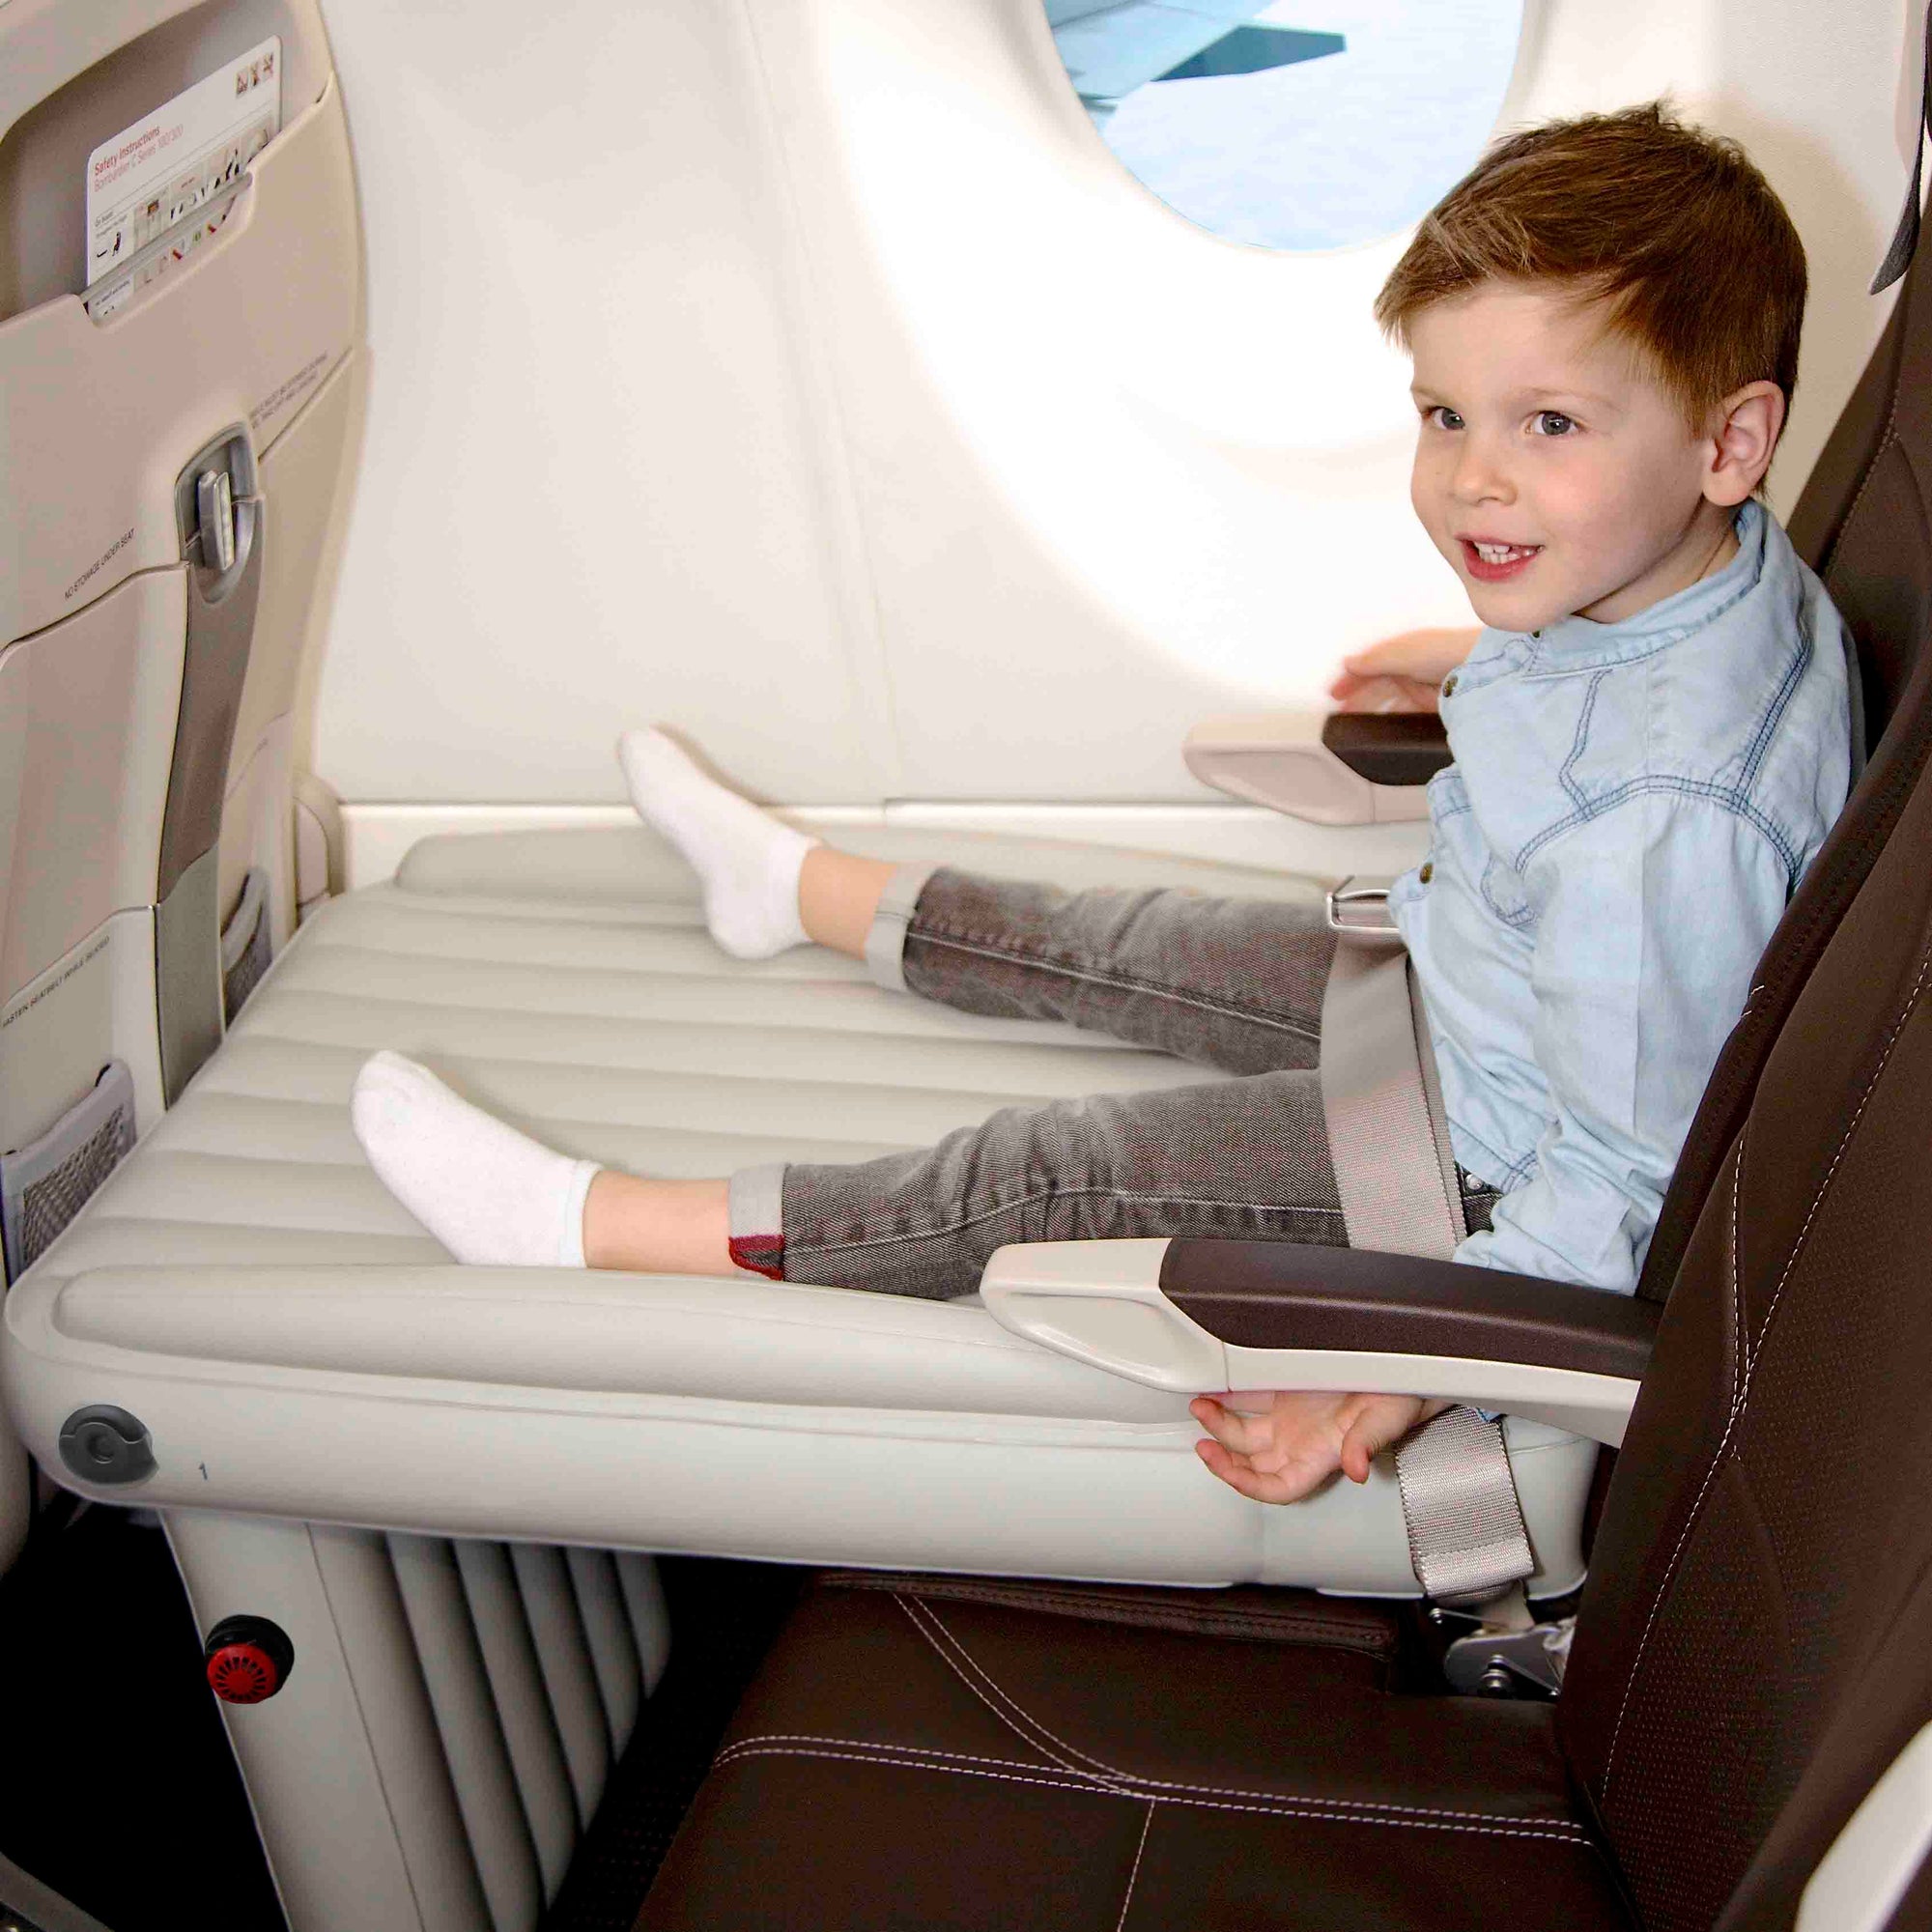 Children's Aircraft Bed, Children's Aircraft Bed, Aircraft Footrest, Children's Travel Bed, Children's Aircraft Basic Travel Supplies, Portable